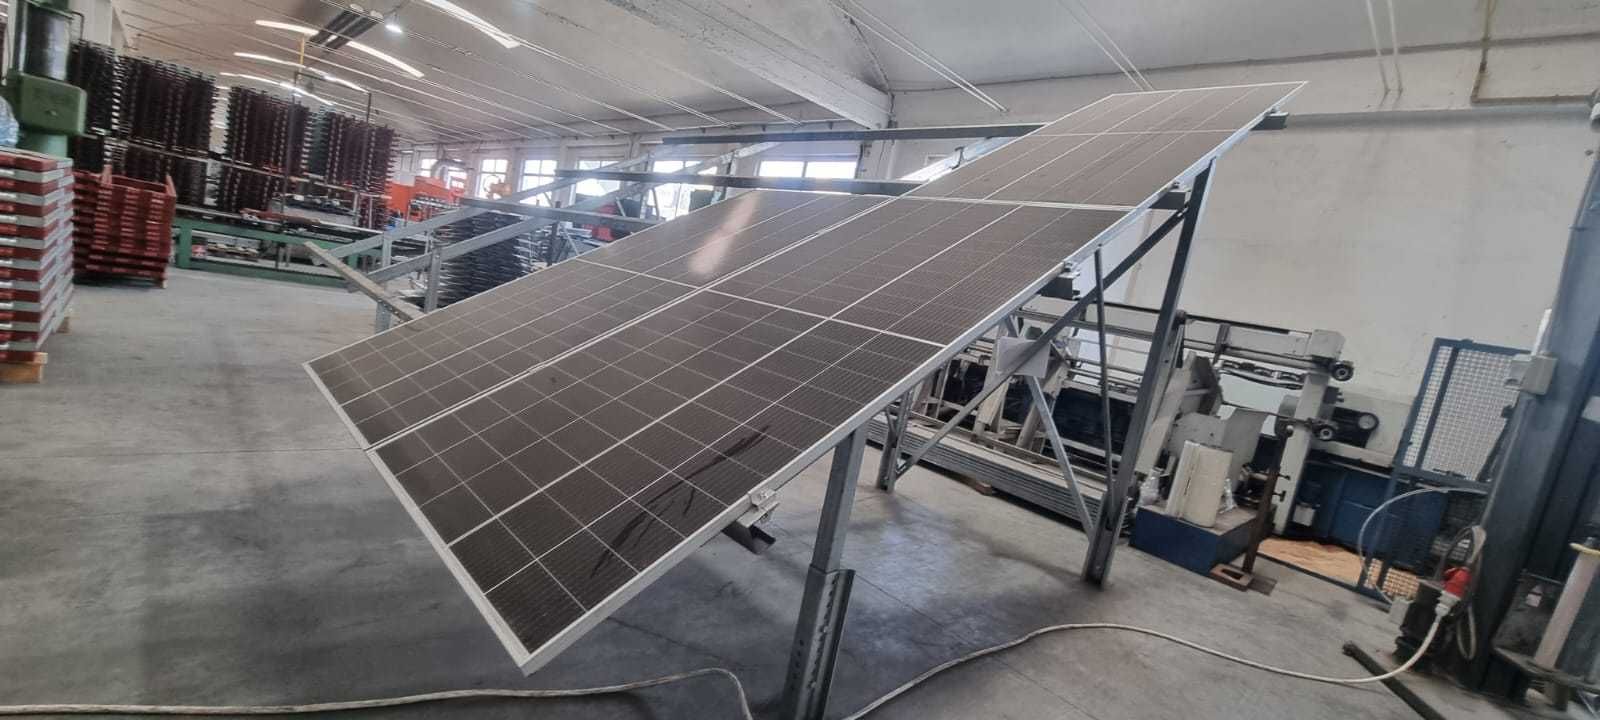 Sistem panouri solare 5 kw, it panouri fotovoltaice huawei 5 kw